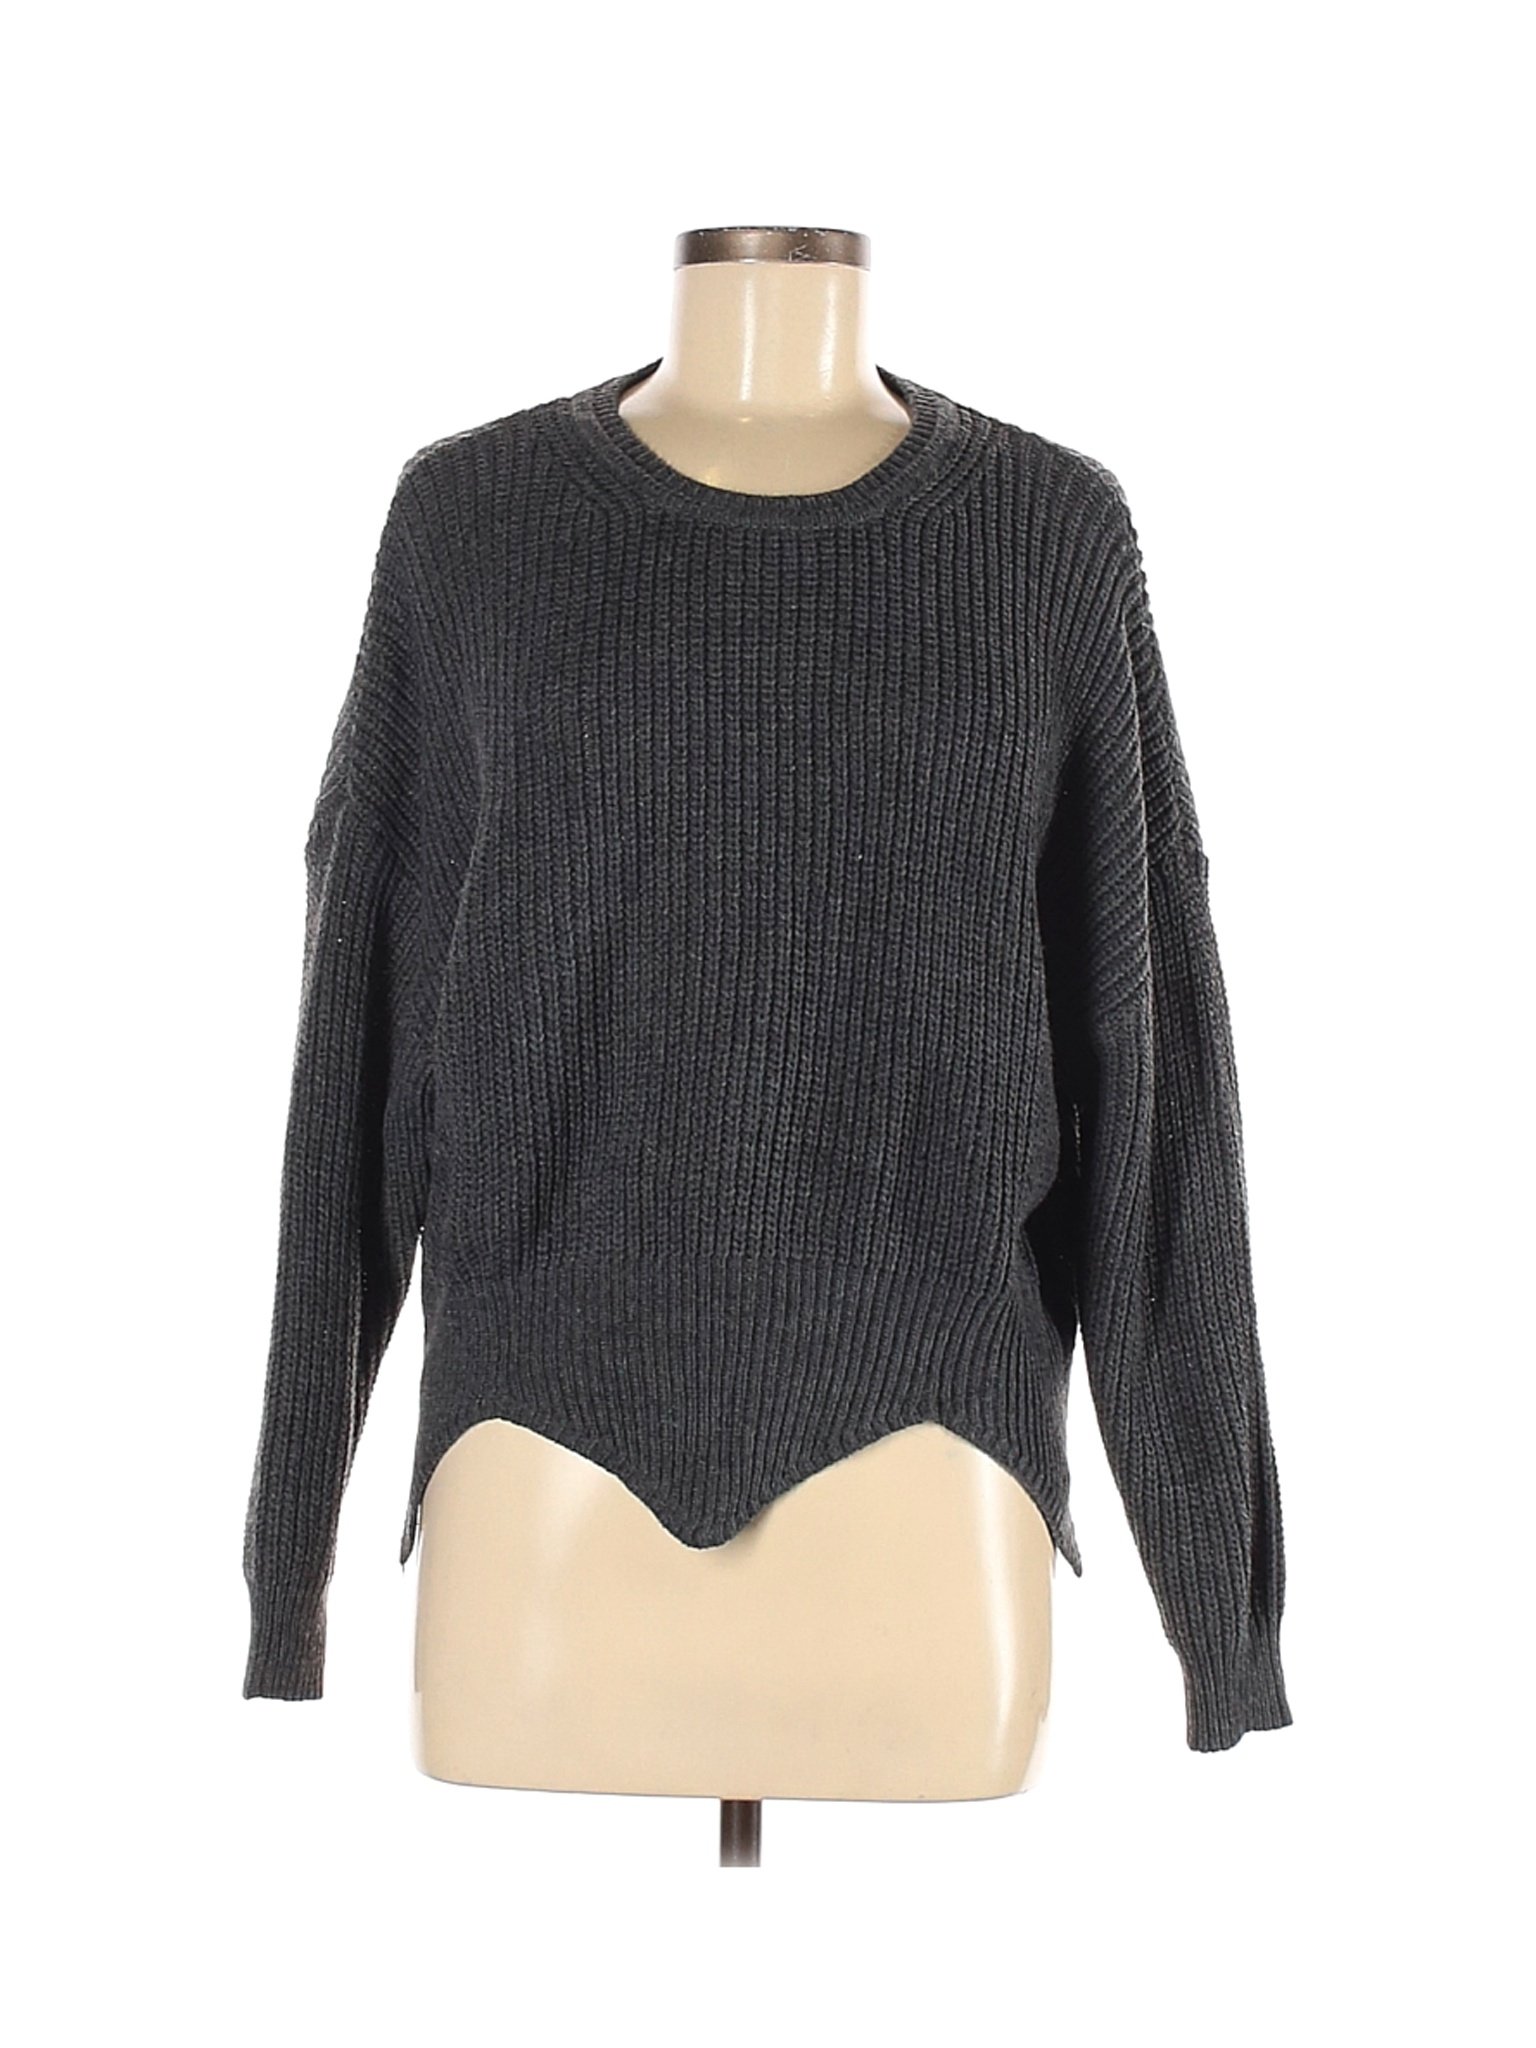 Shein Women Gray Pullover Sweater M | eBay